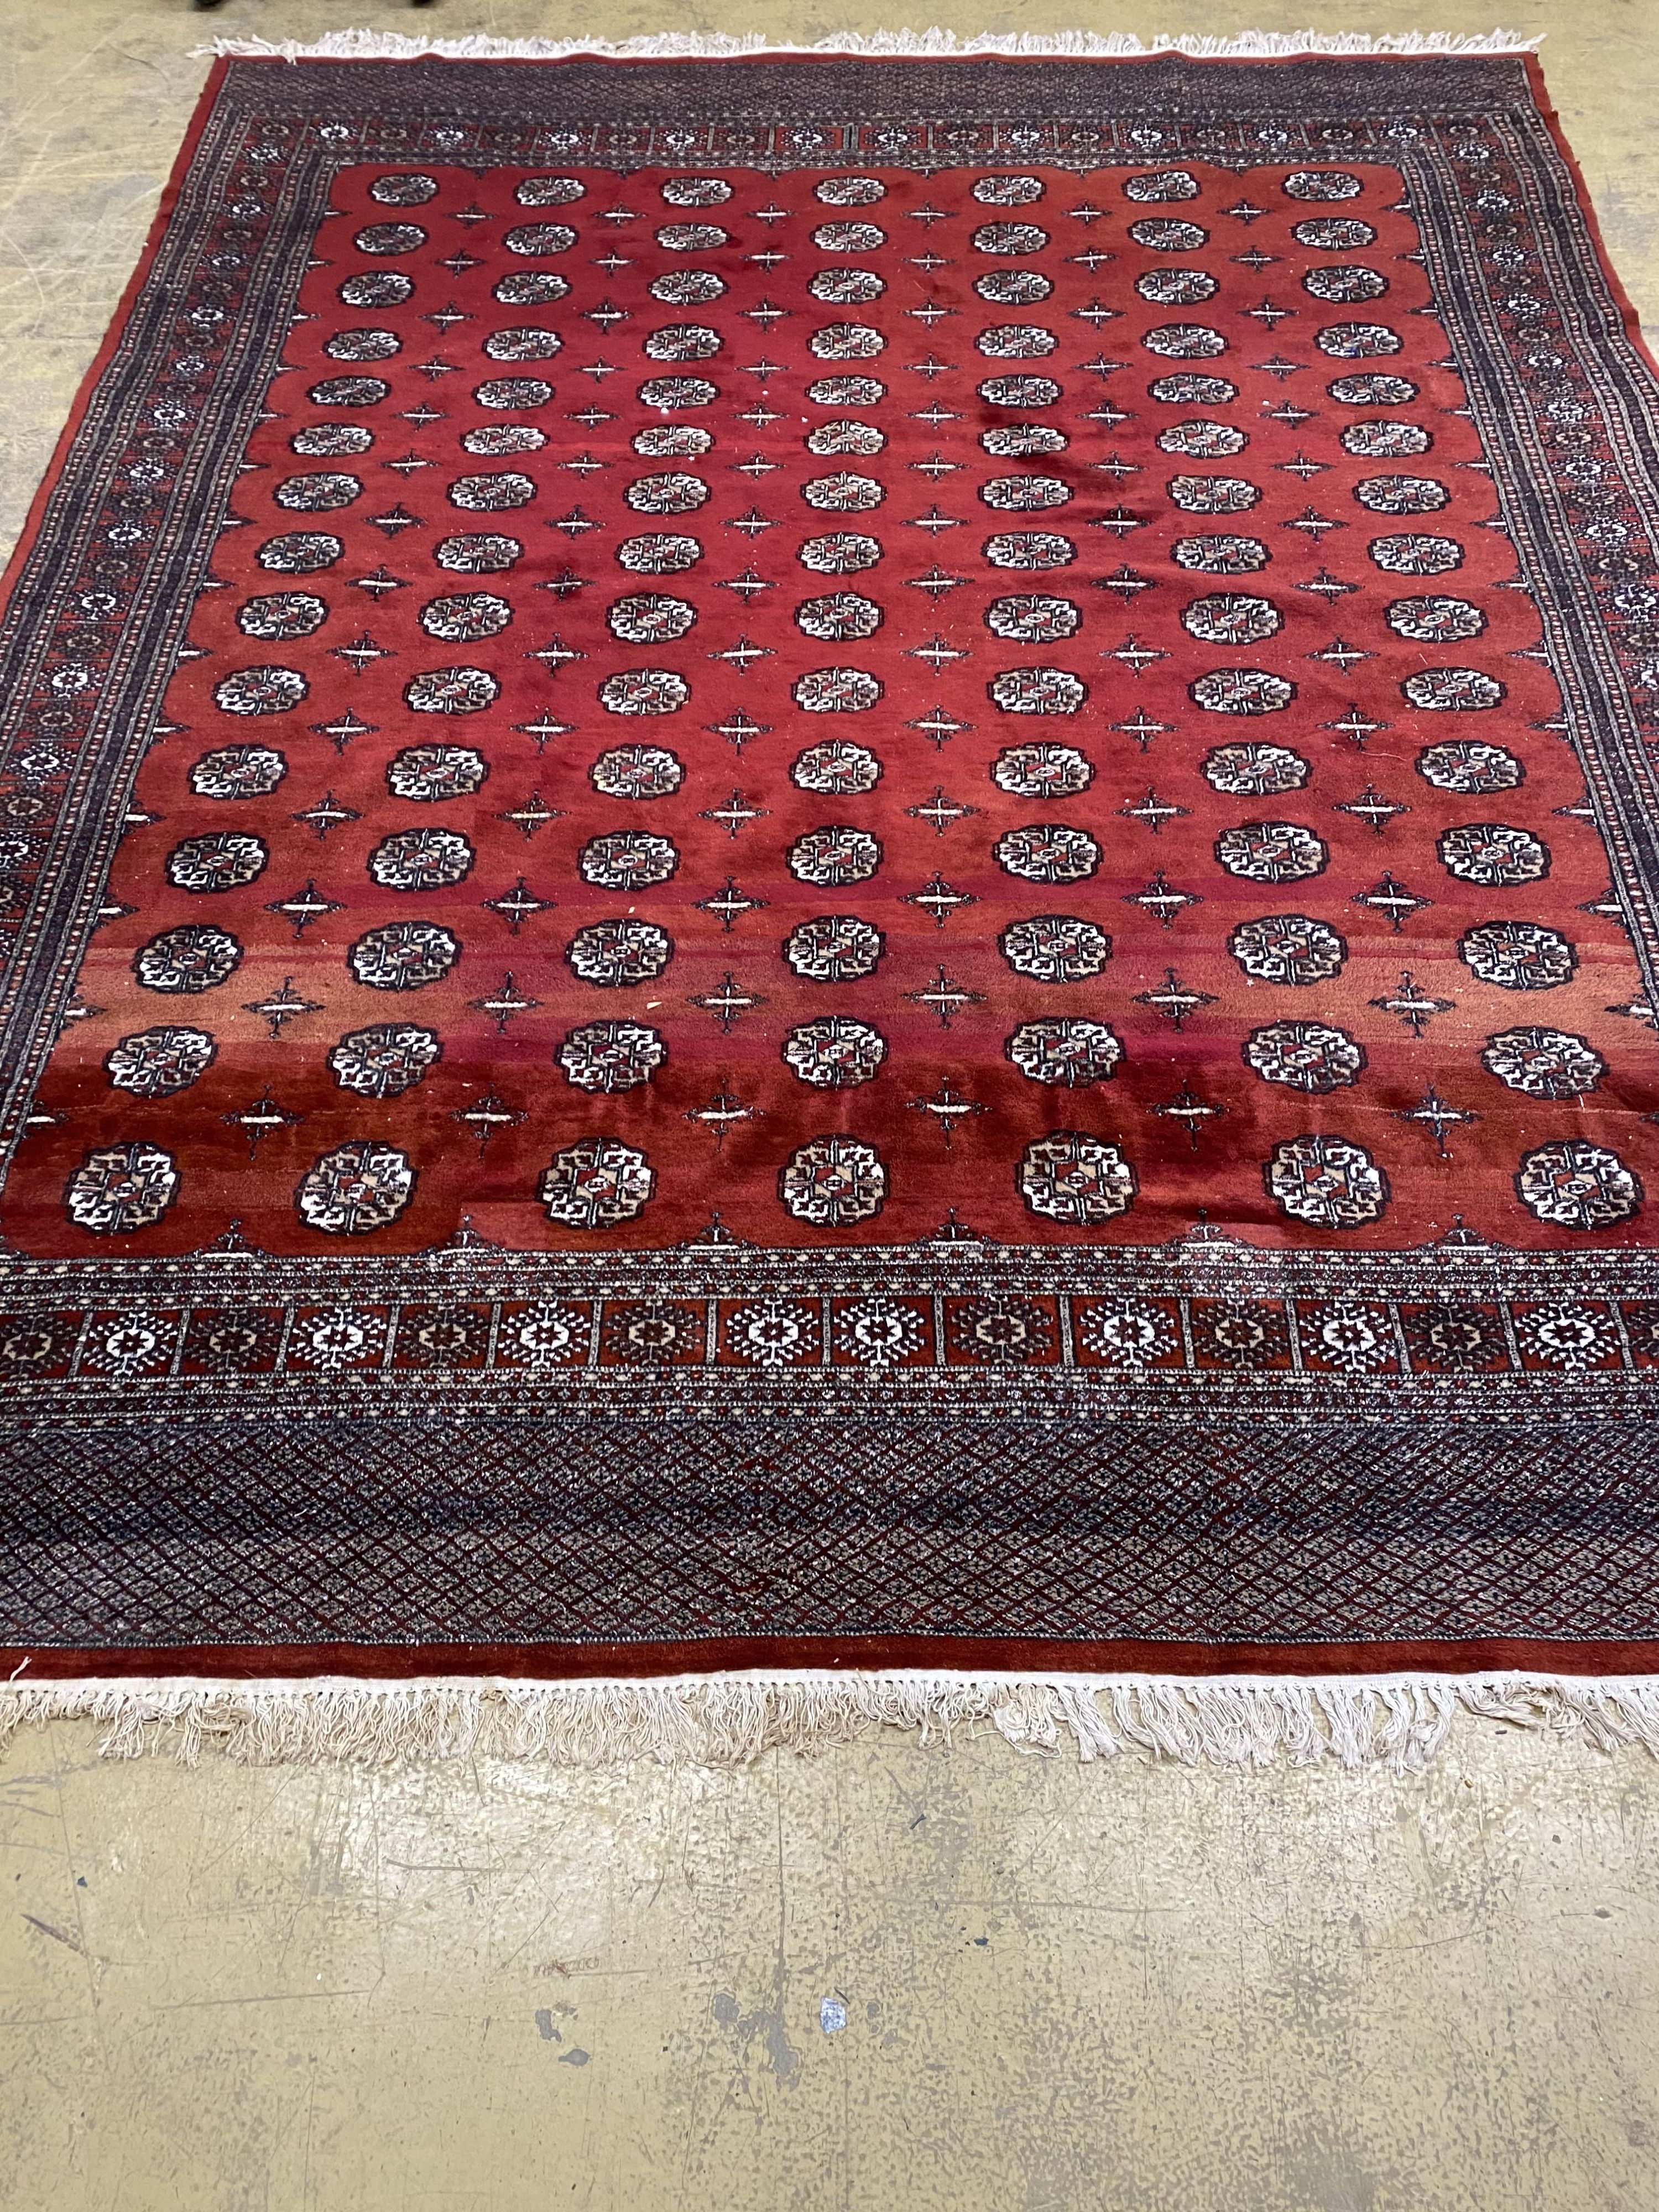 A Bokhara burgundy ground carpet, 334 x 274cm